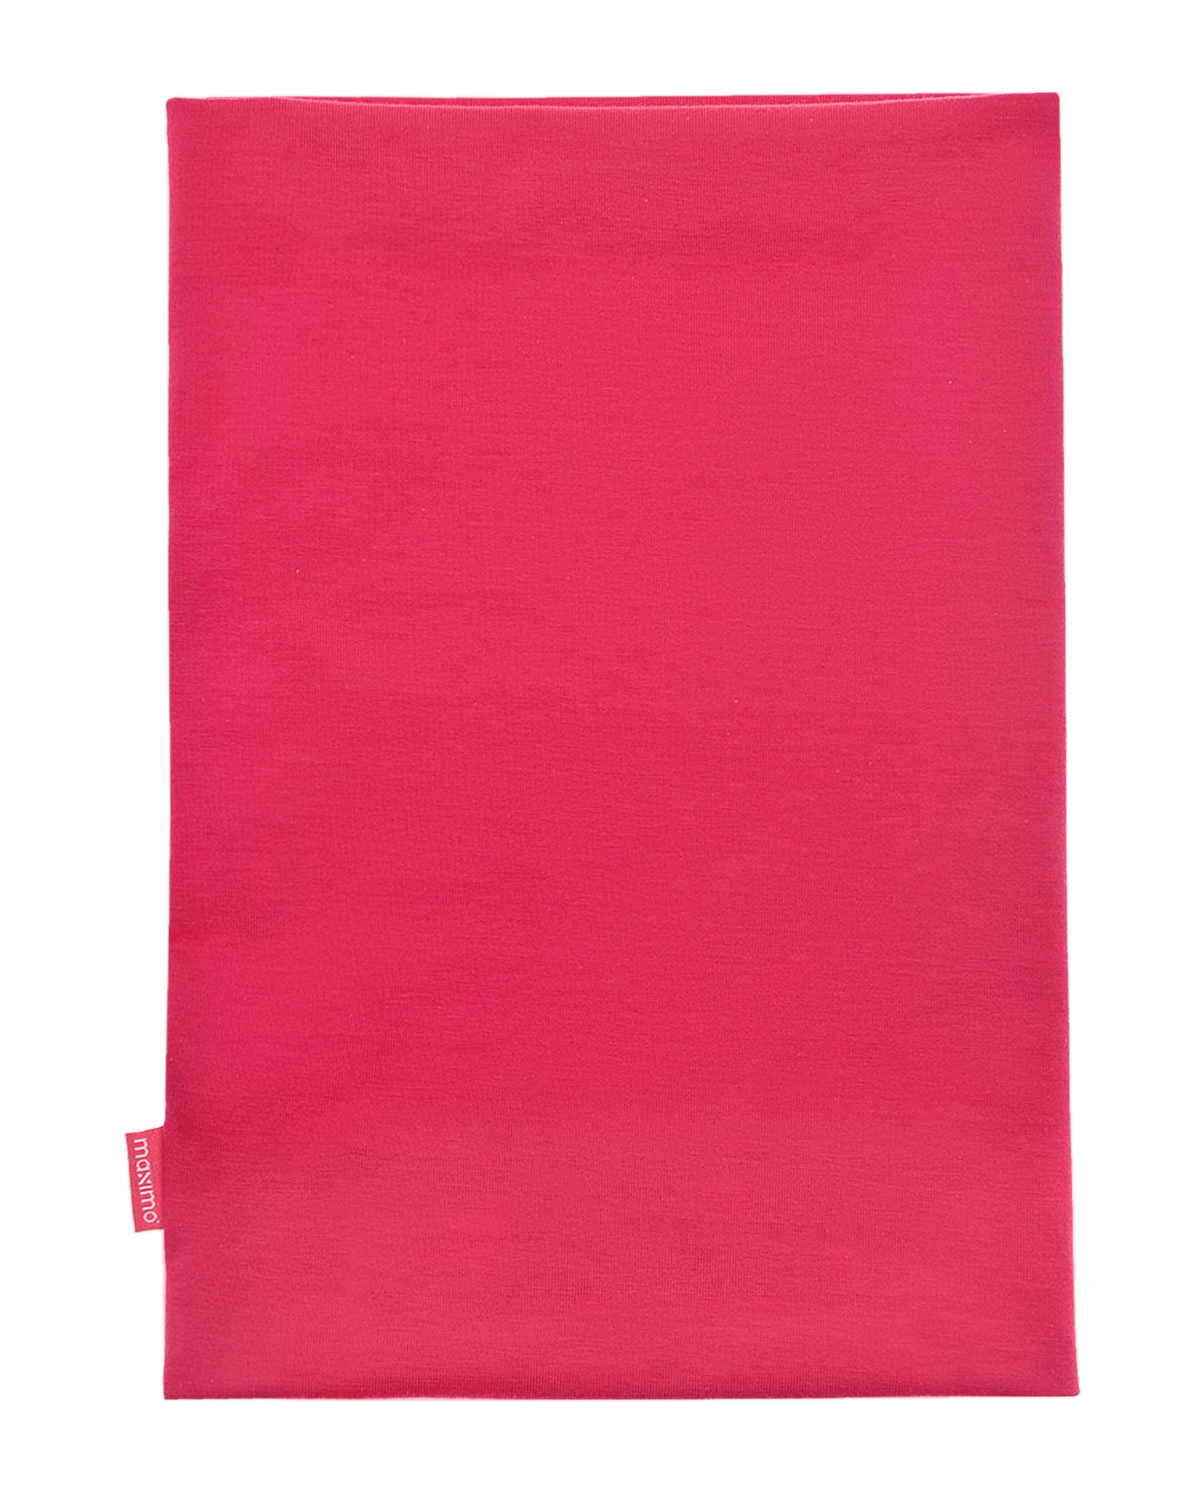 Шарф-снуд цвета фуксии MaxiMo детский, размер 1 - фото 2